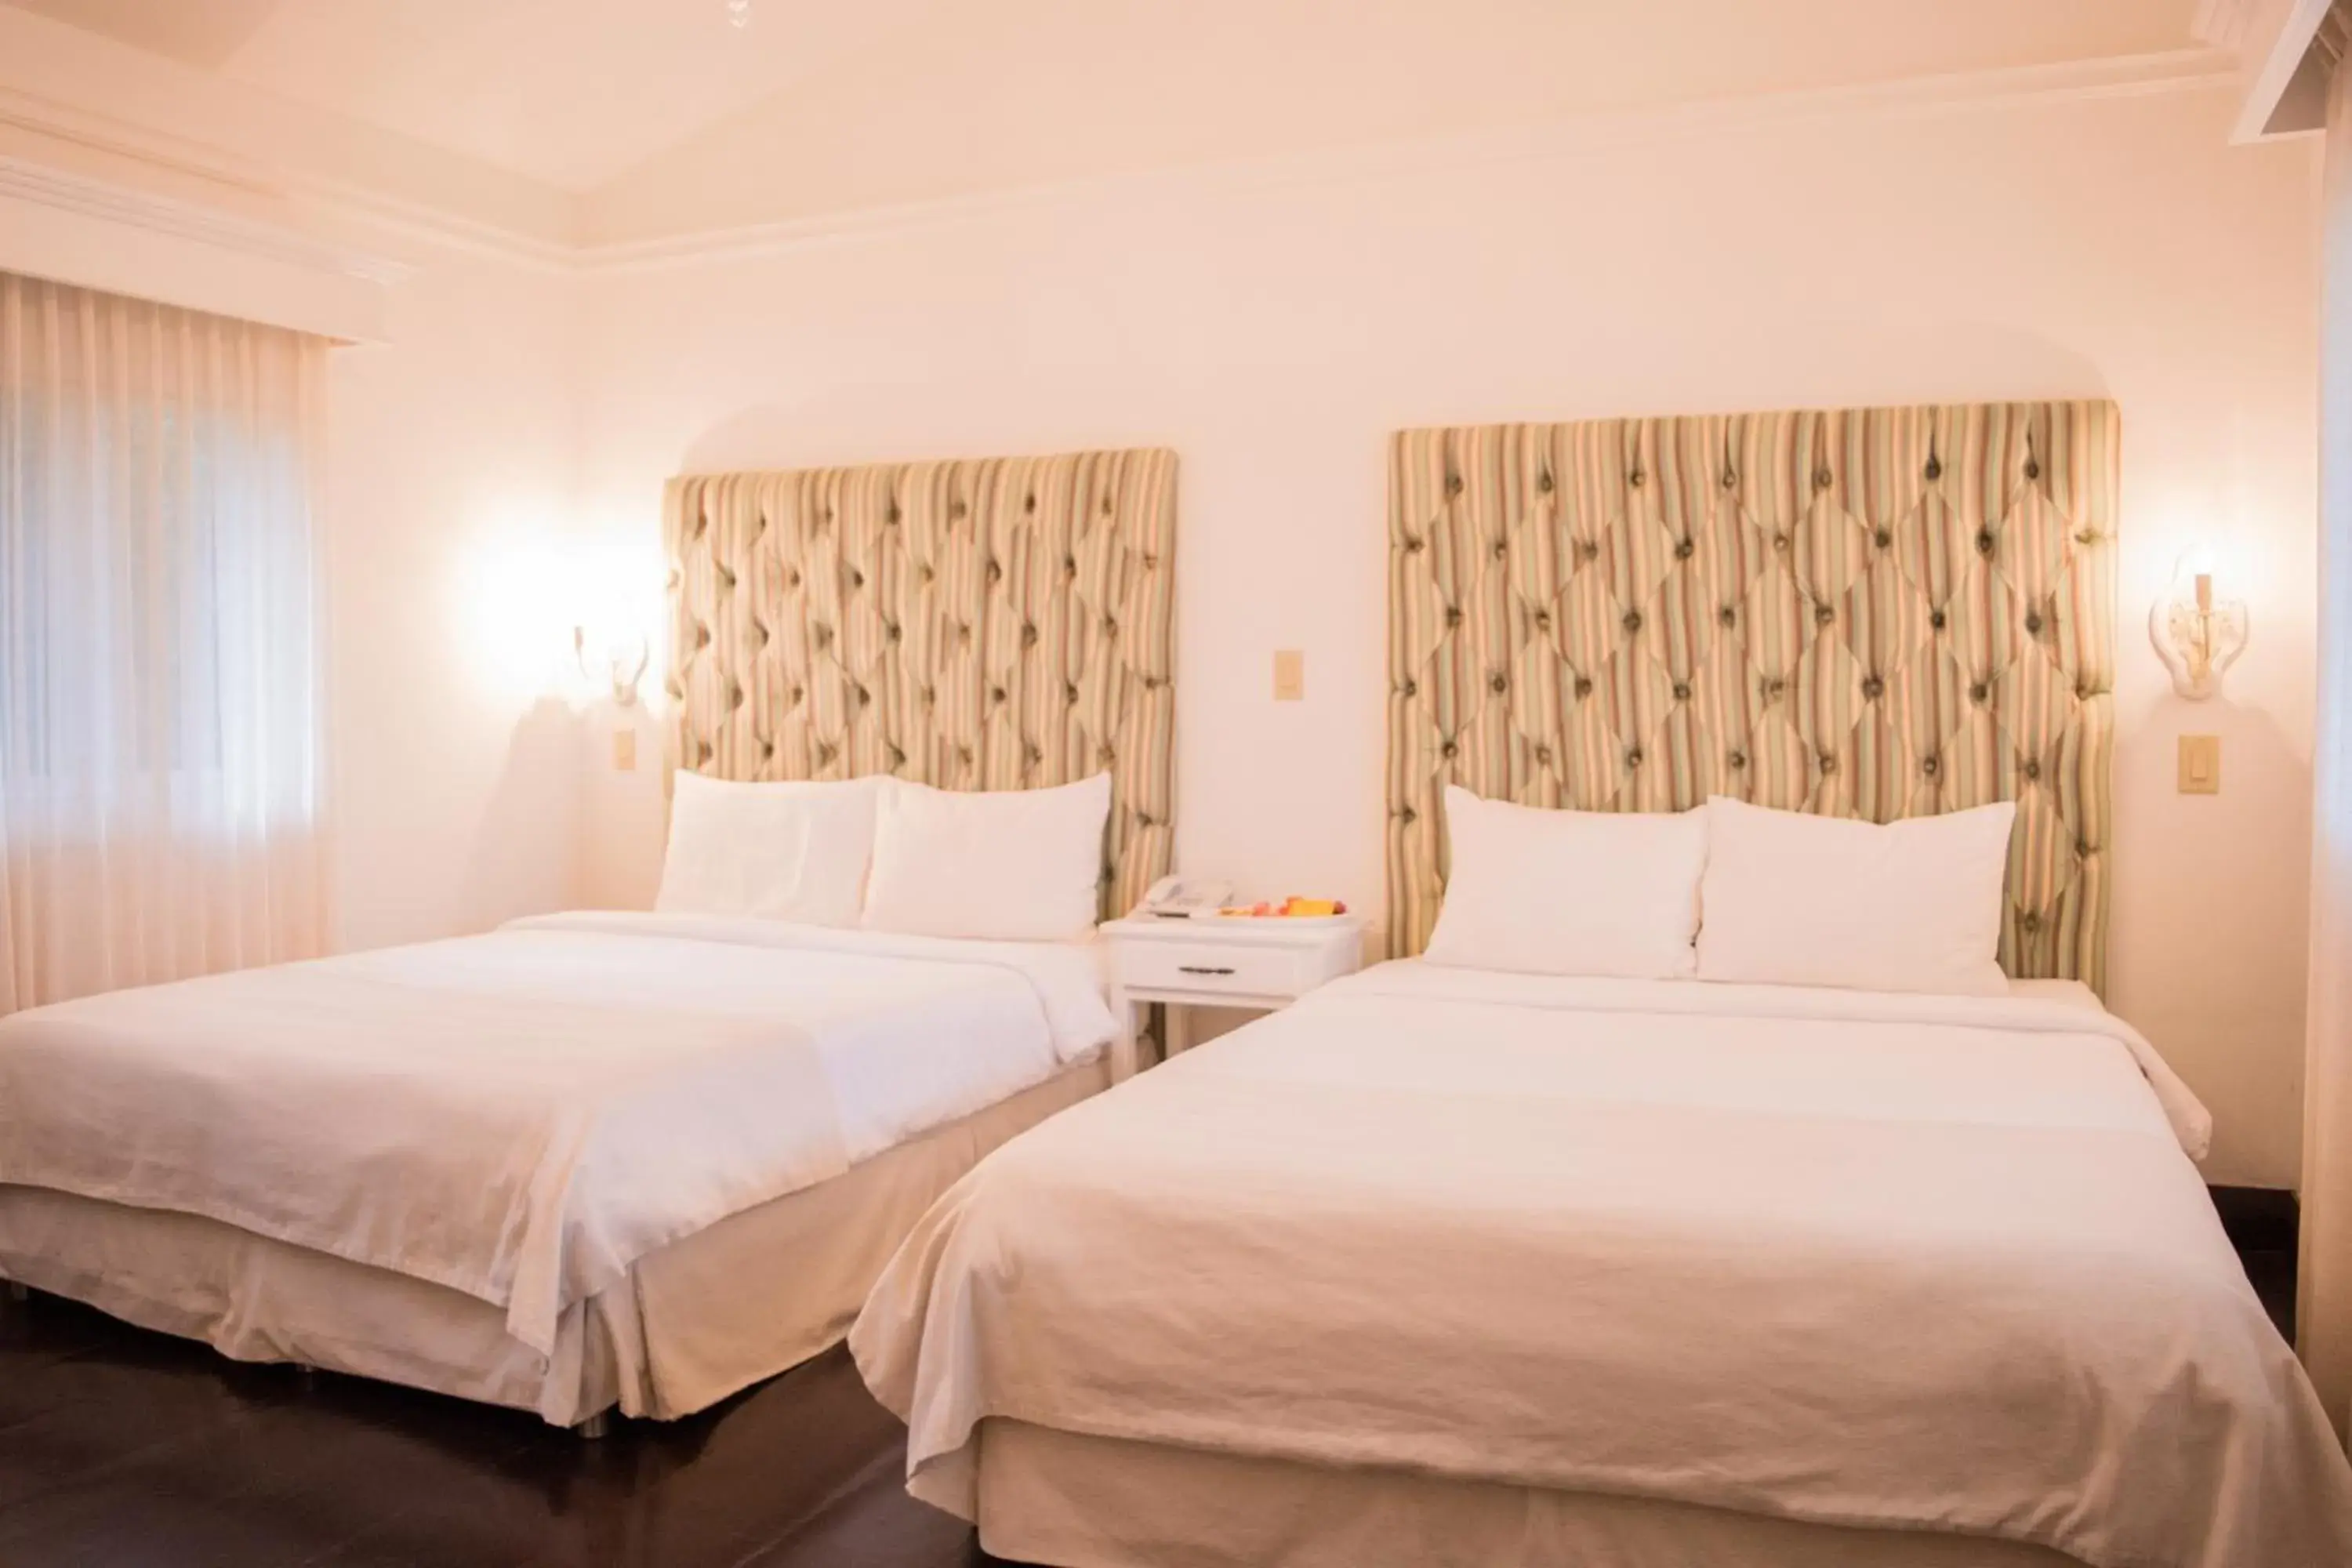 Bedroom, Bed in Hotel Finca Lerida Coffee Plantation and Boutique Hotel